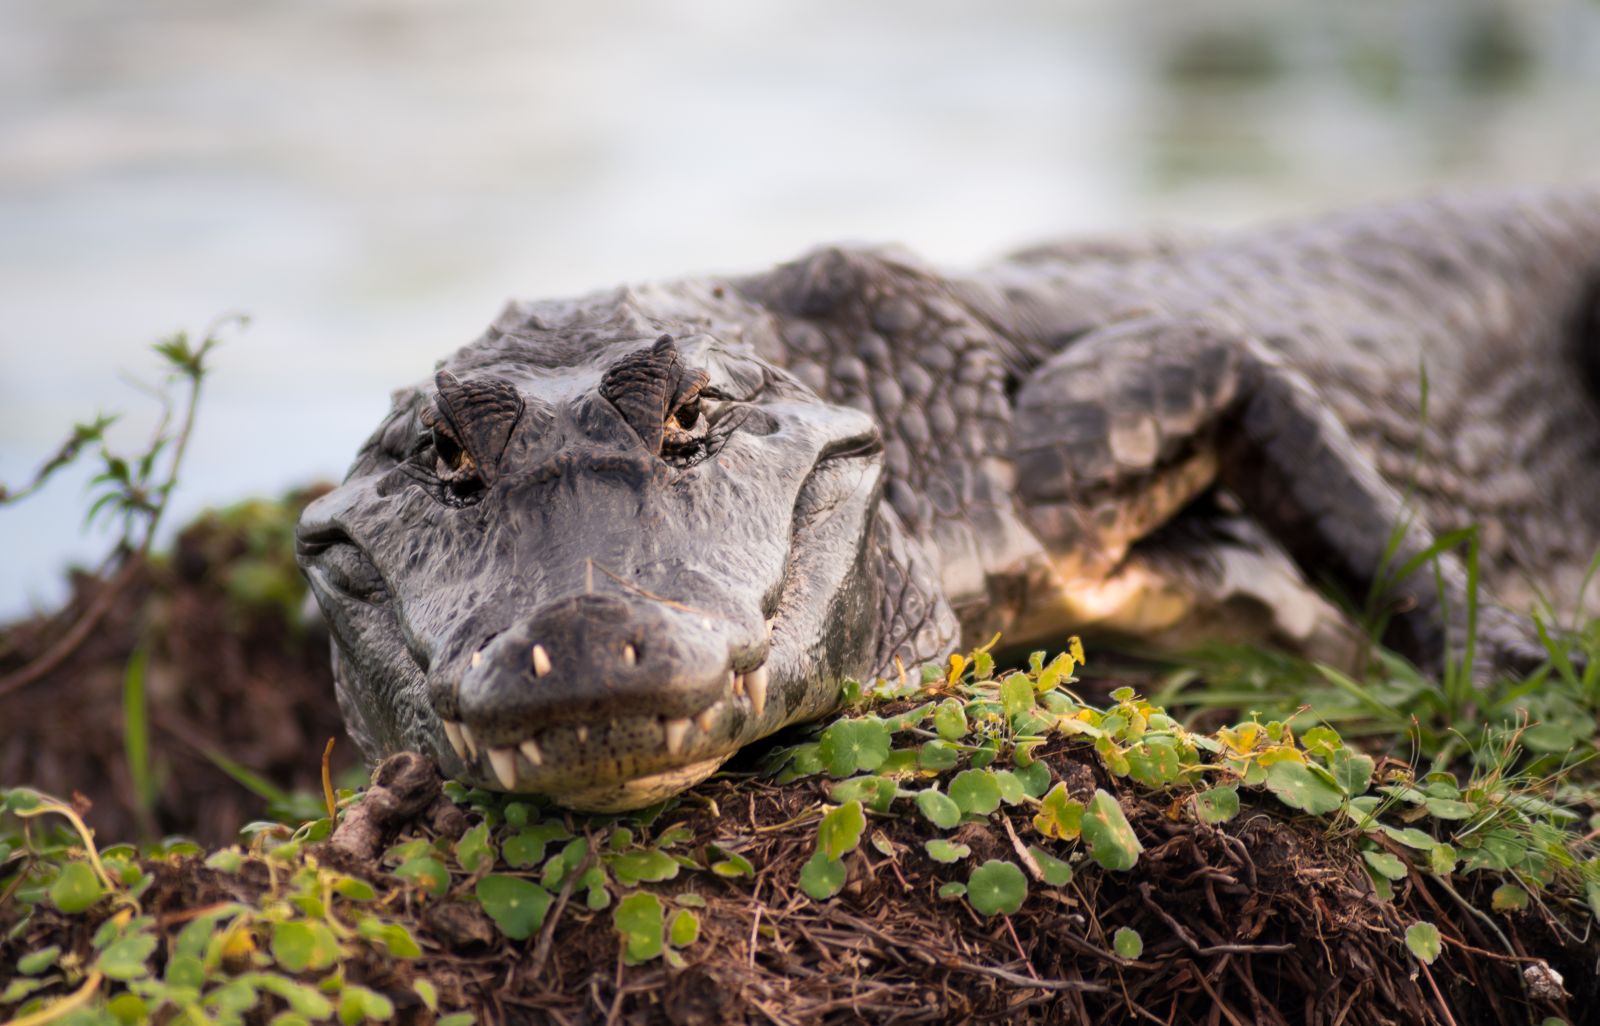 An alligator in the Ibera Wetlands in Argentina